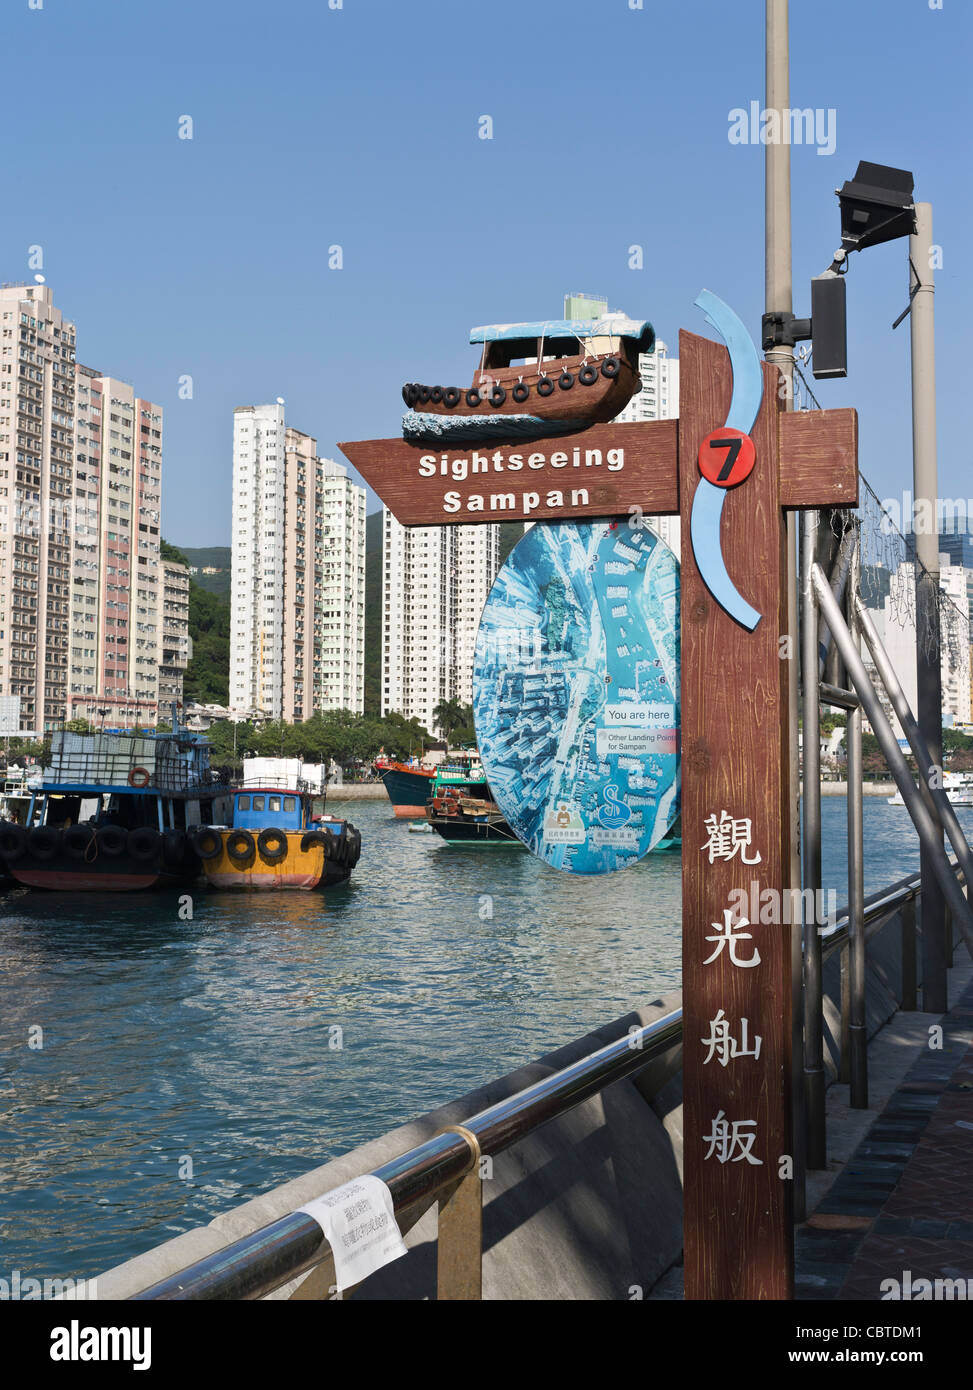 dh Aberdeen Harbour ABERDEEN HONG KONG Signo de Sampan AP Lei Chau señales turísticas Foto de stock